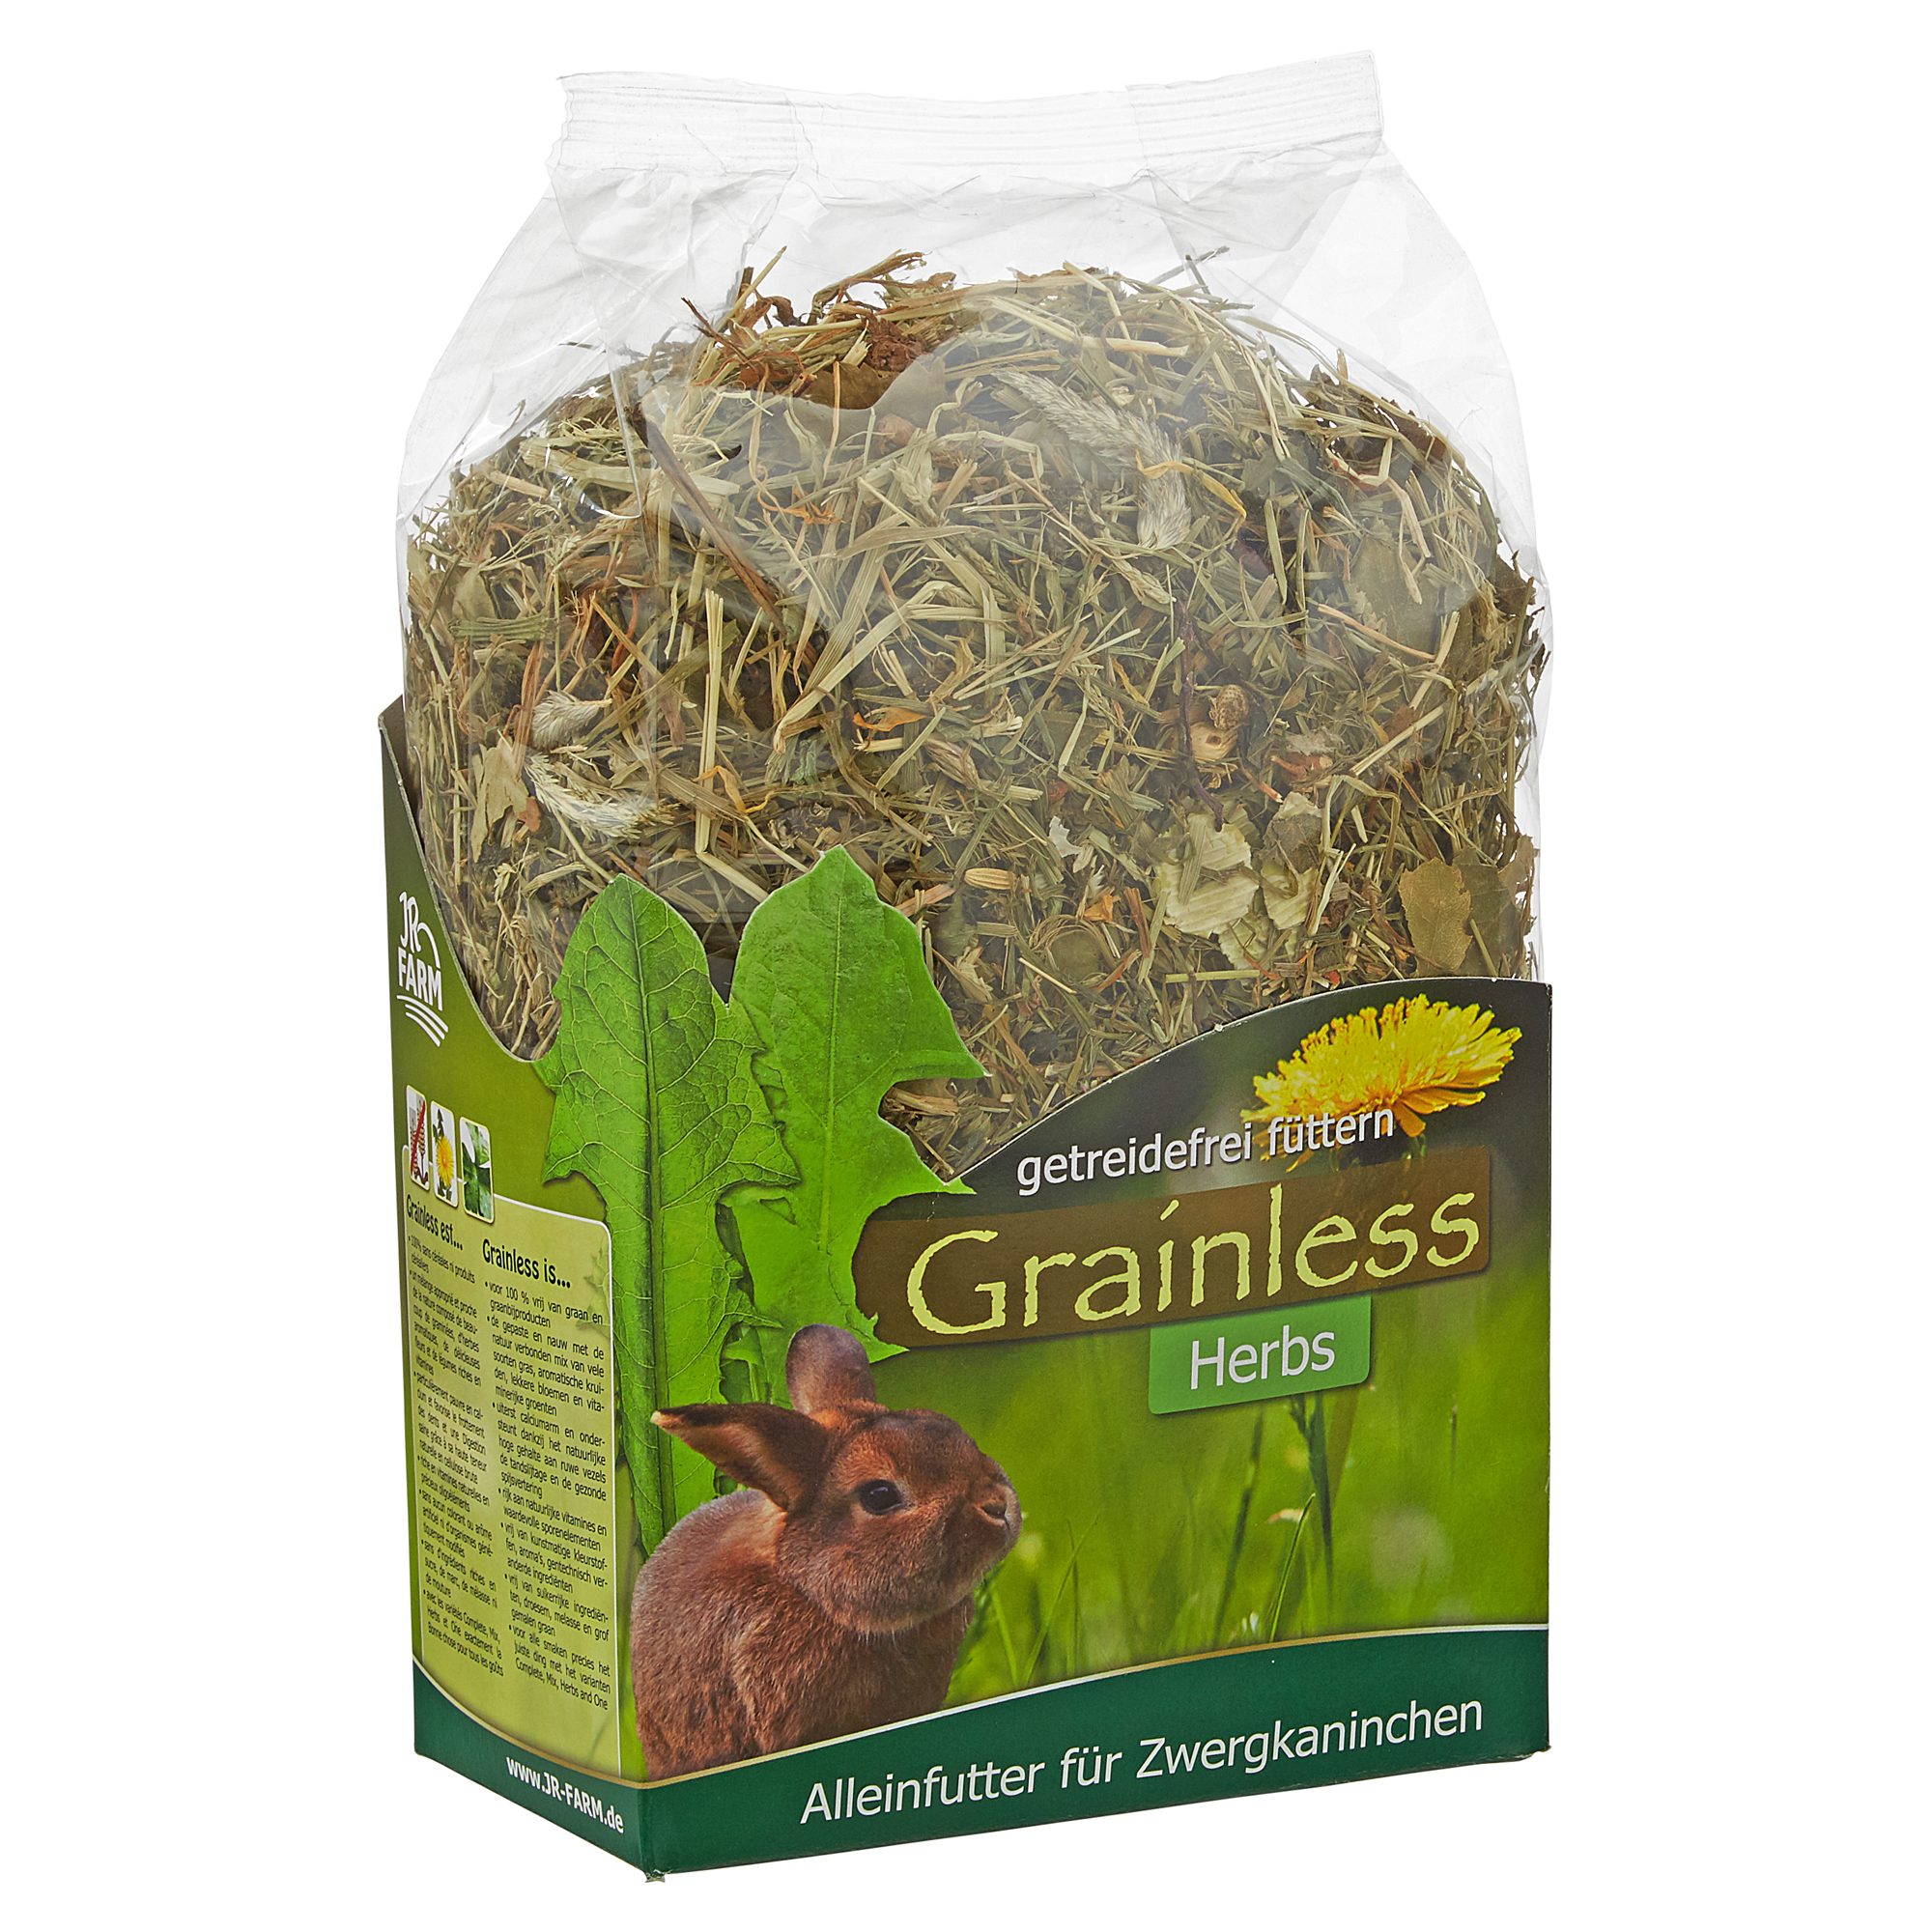 Nagerfutter "Grainless" Herbs 400 g Zwergkaninchen + product picture